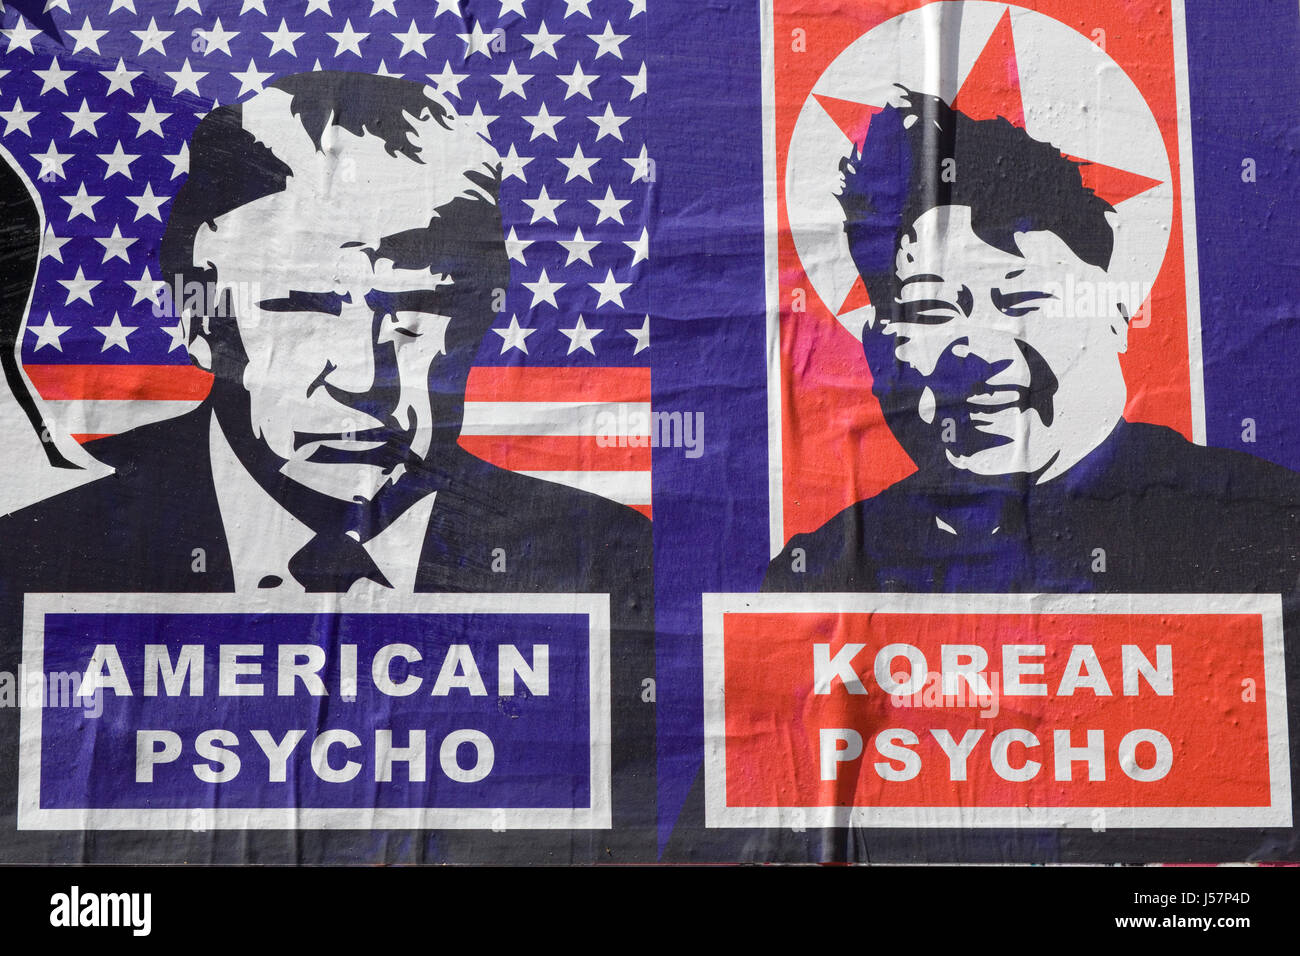 American Psycho And Korean Psycho Donald Trump And Kim Jong Un Poster Stock Photo Alamy